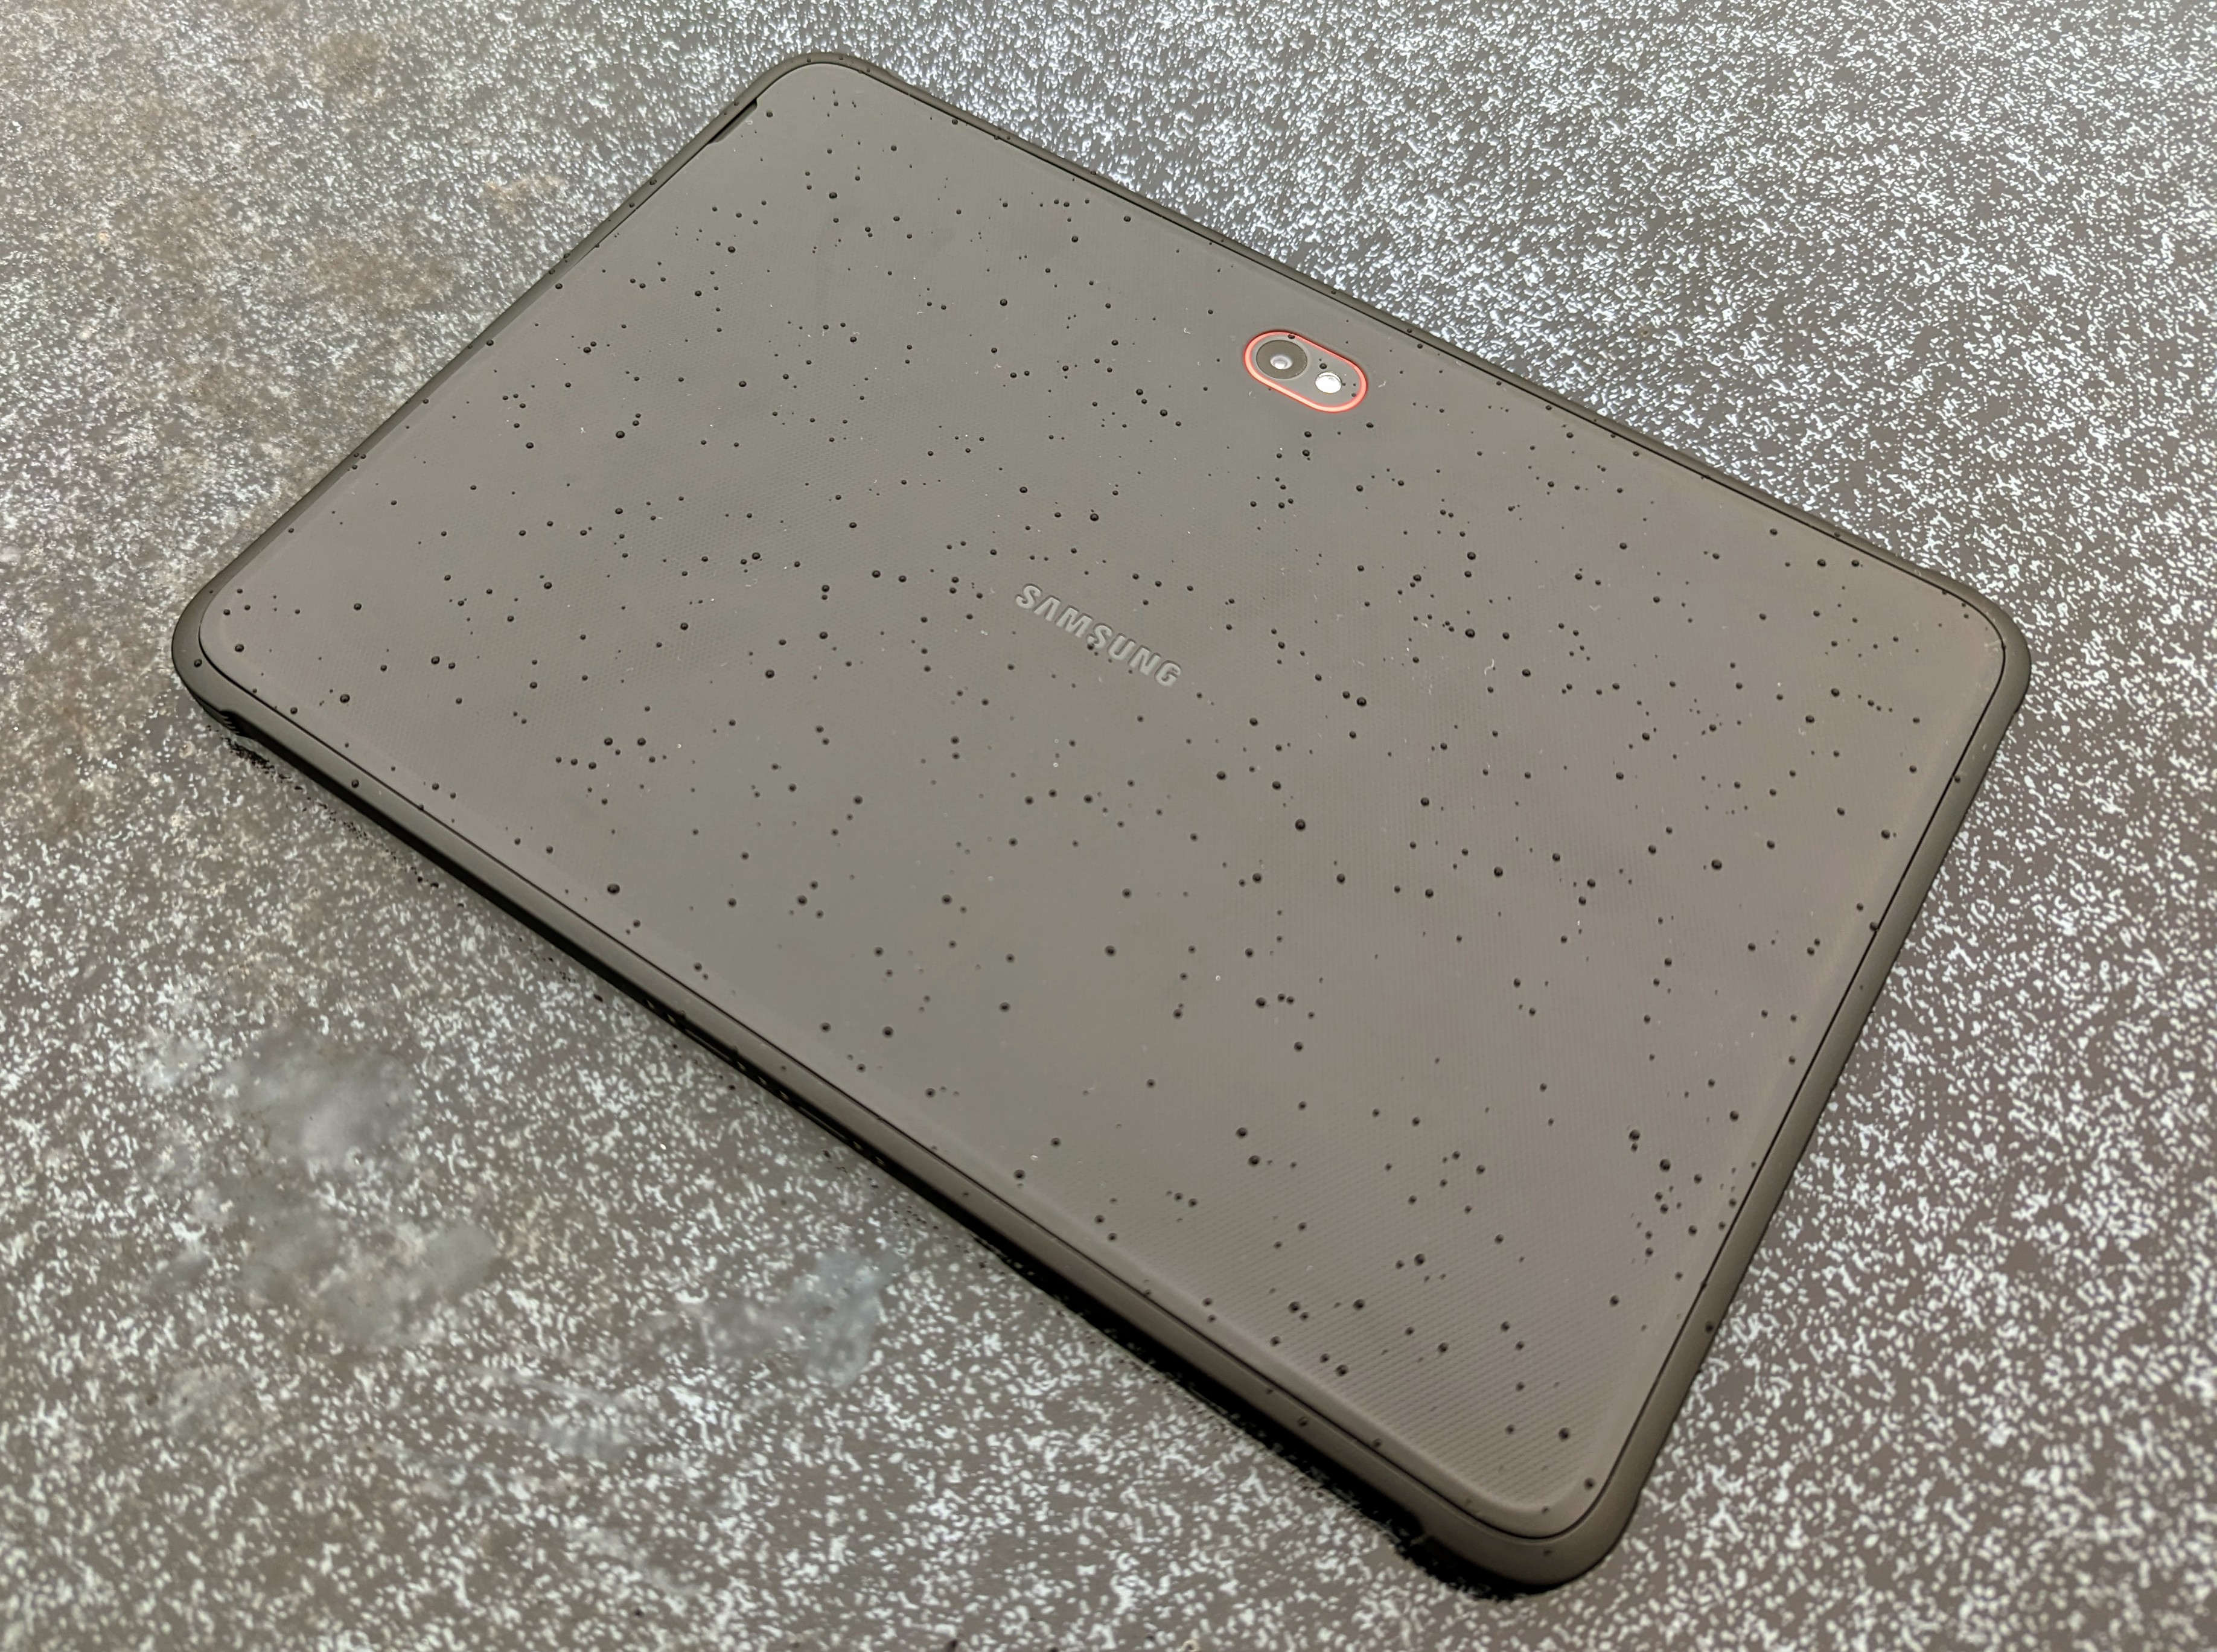 Broek stoel versnelling Samsung Galaxy Tab Active4 Pro review: Weerbestendige tablet met  vervangbare batterij - Notebookcheck.nl